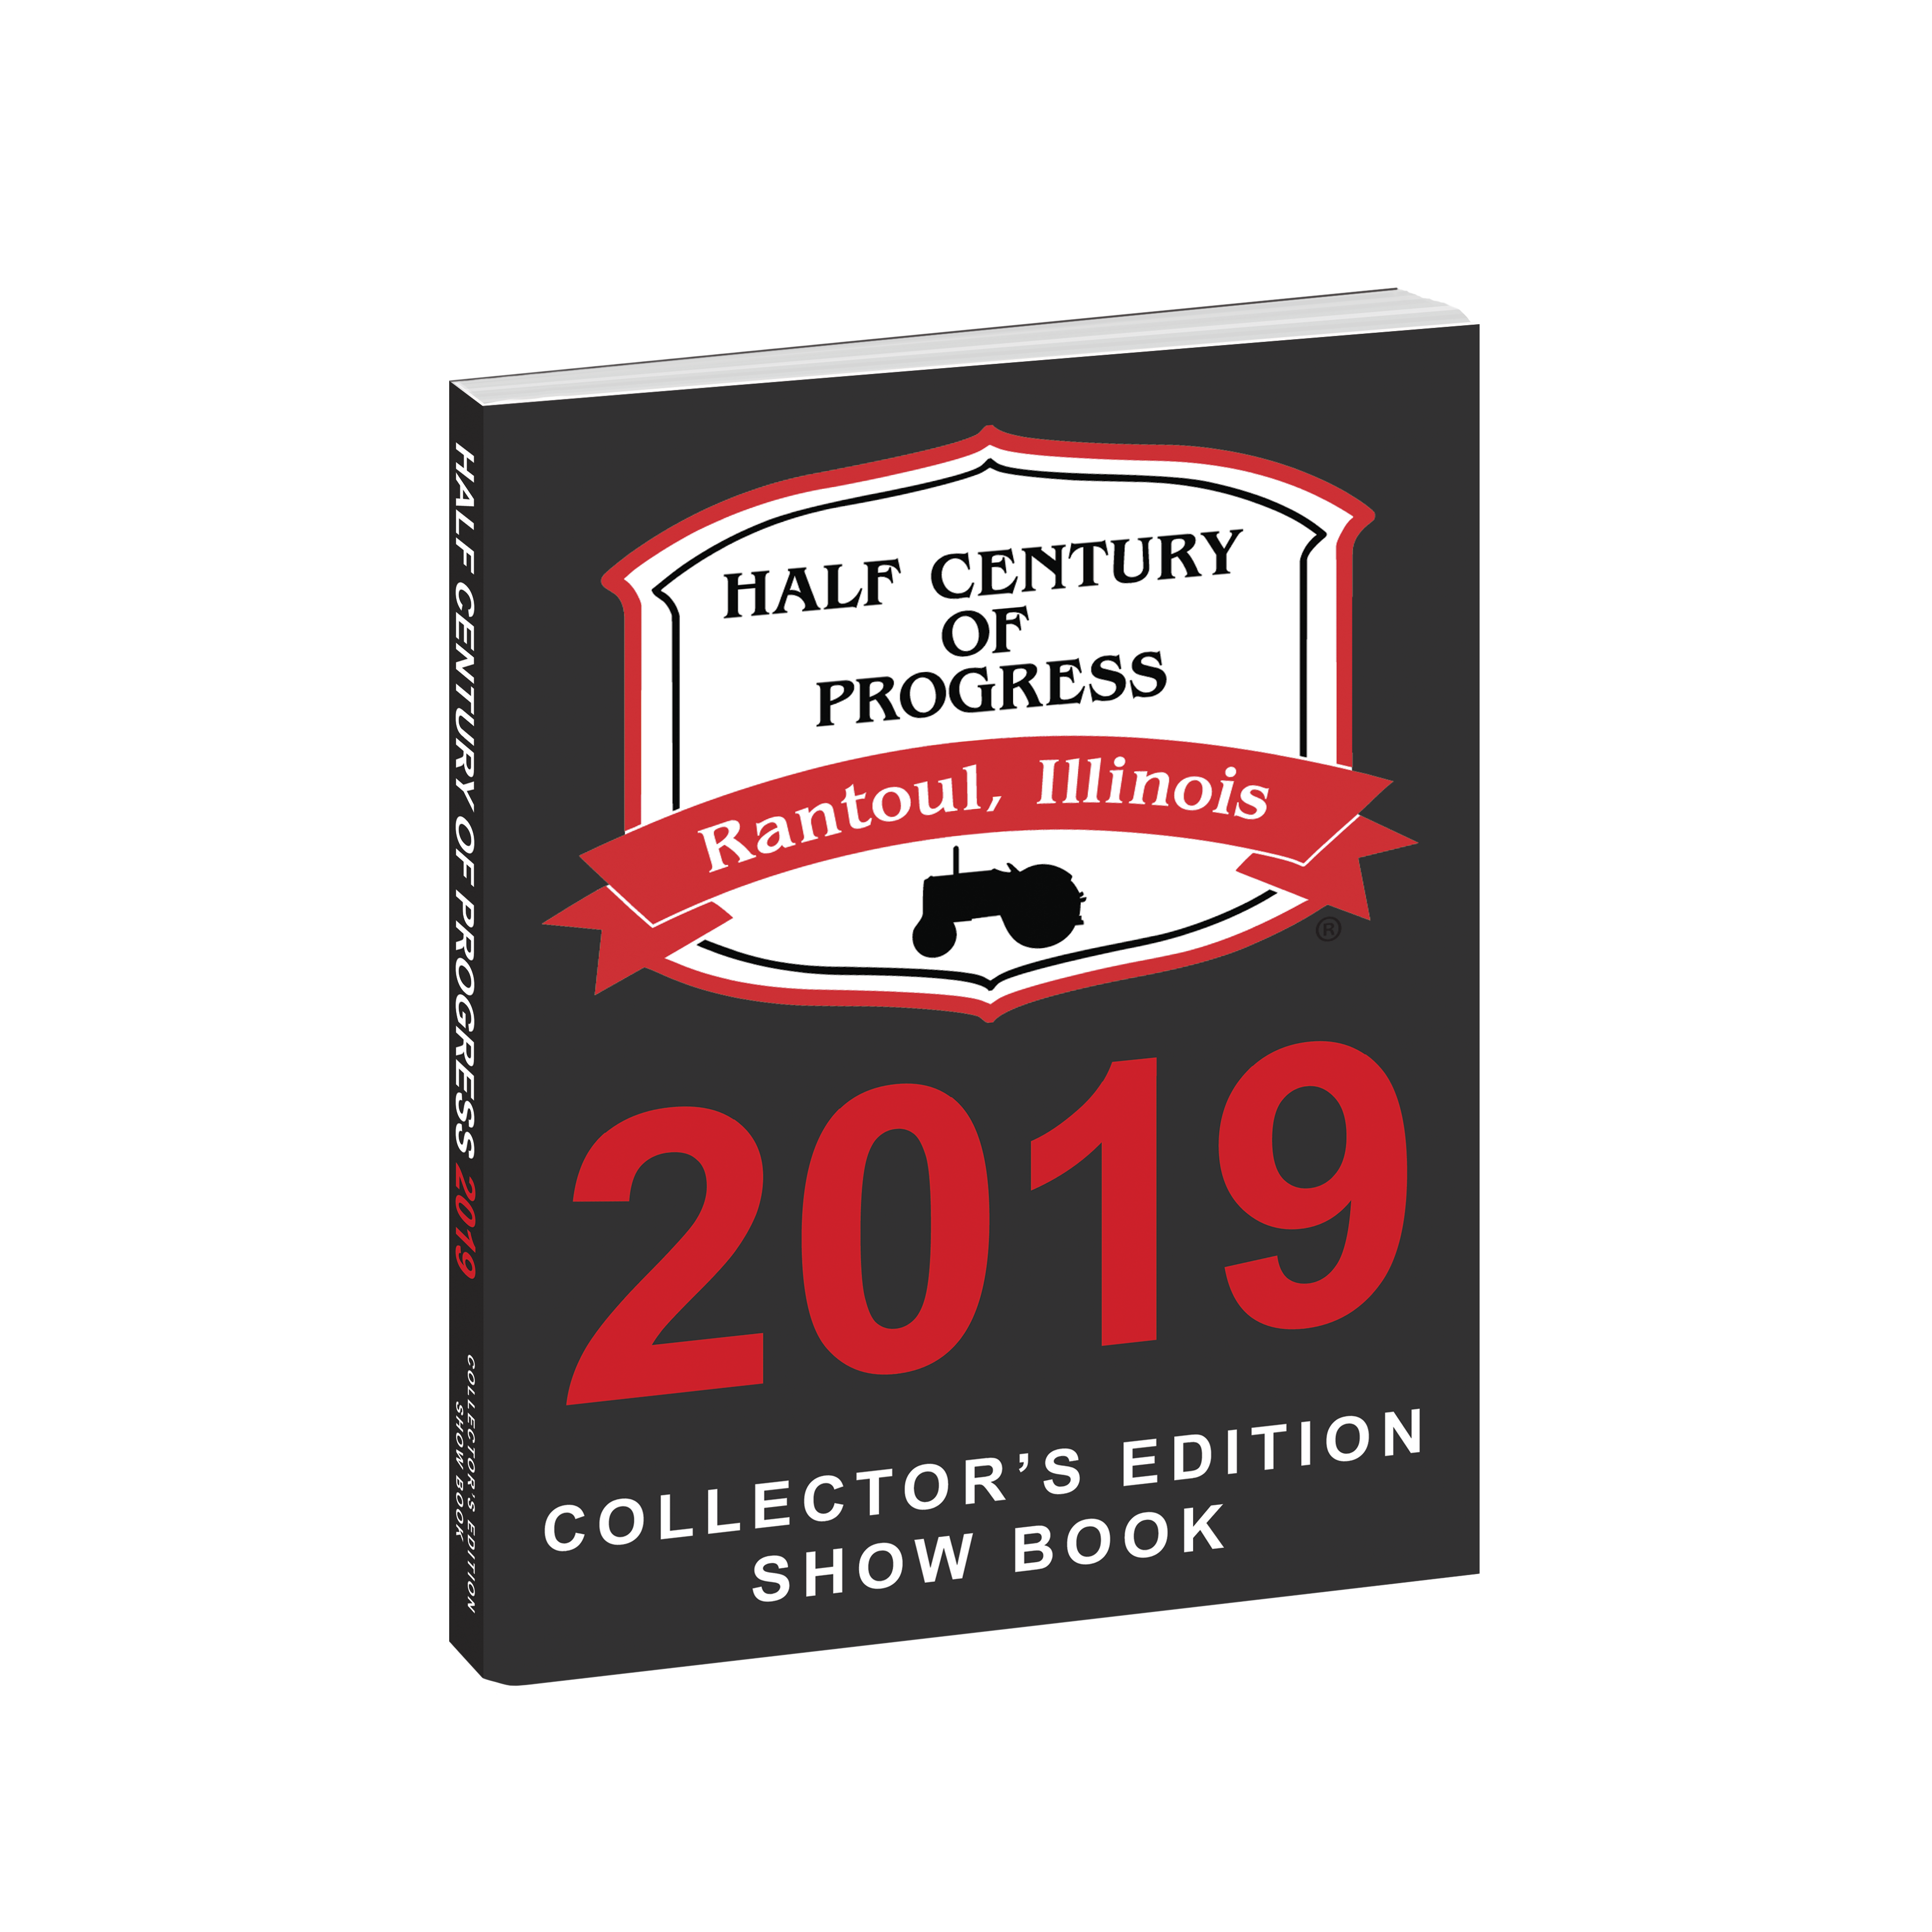 2019 half century of progress collector's edition book cover